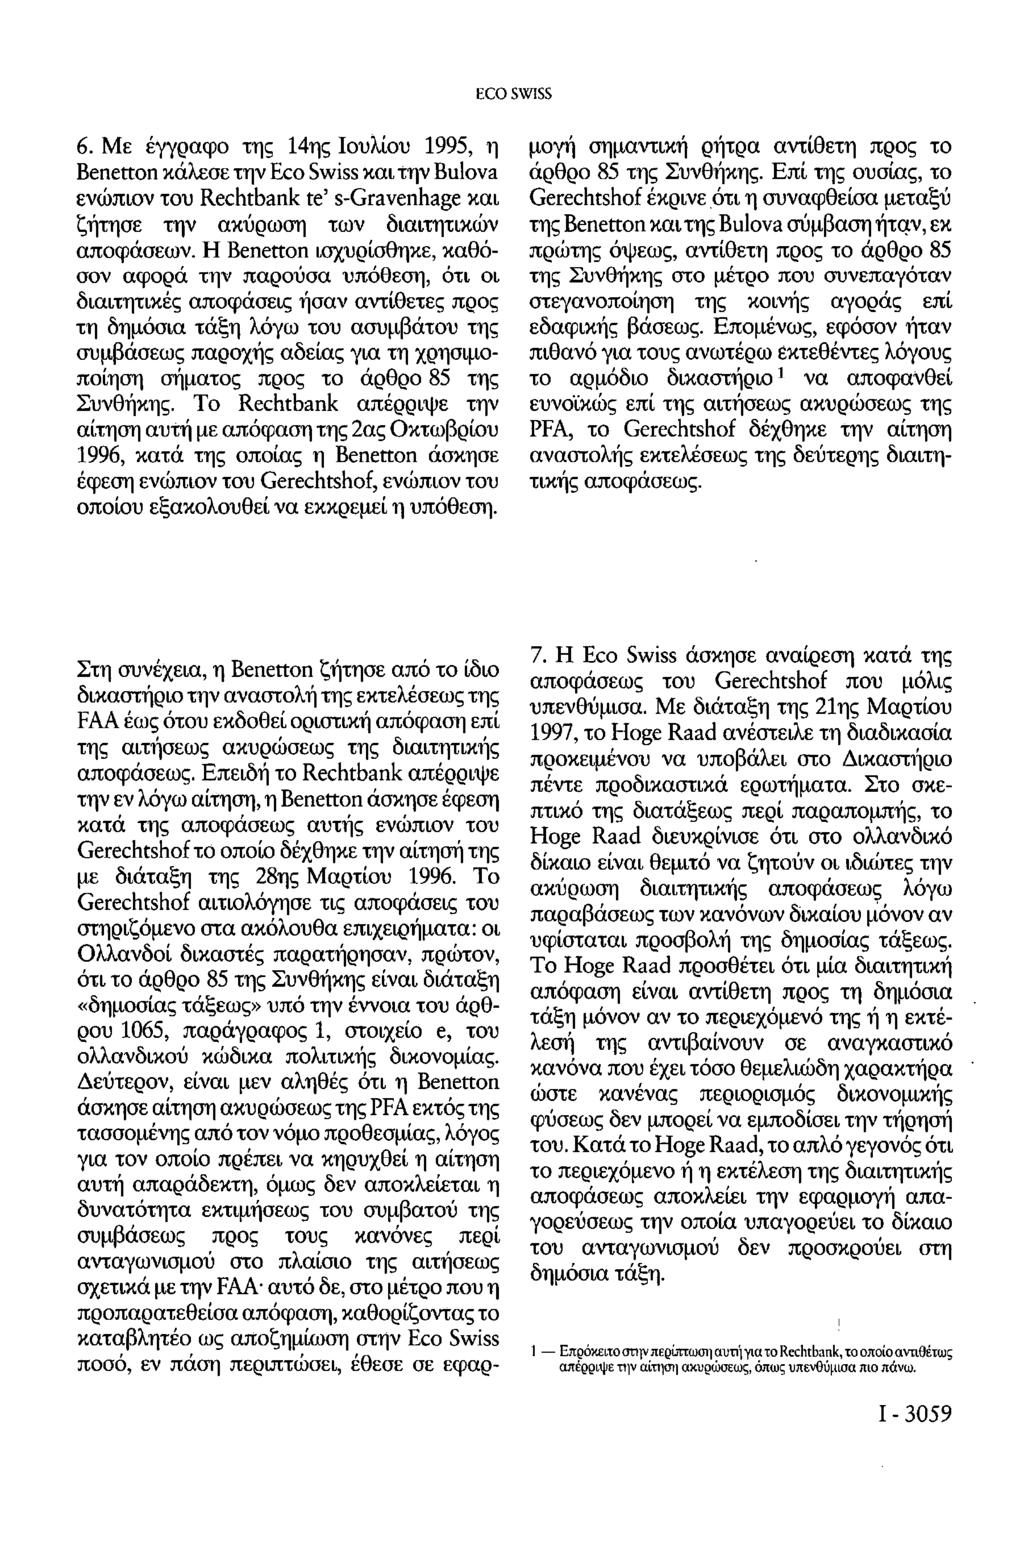 ECO SWISS 6. Με έγγραφο της 14ης Ιουλίου 1995, η Benetton κάλεσε την Eco Swiss και την Bulova ενώπιον του Rechtbank te' s-gravenhage και ζήτησε την ακύρωση των διαιτητικών αποφάσεων.